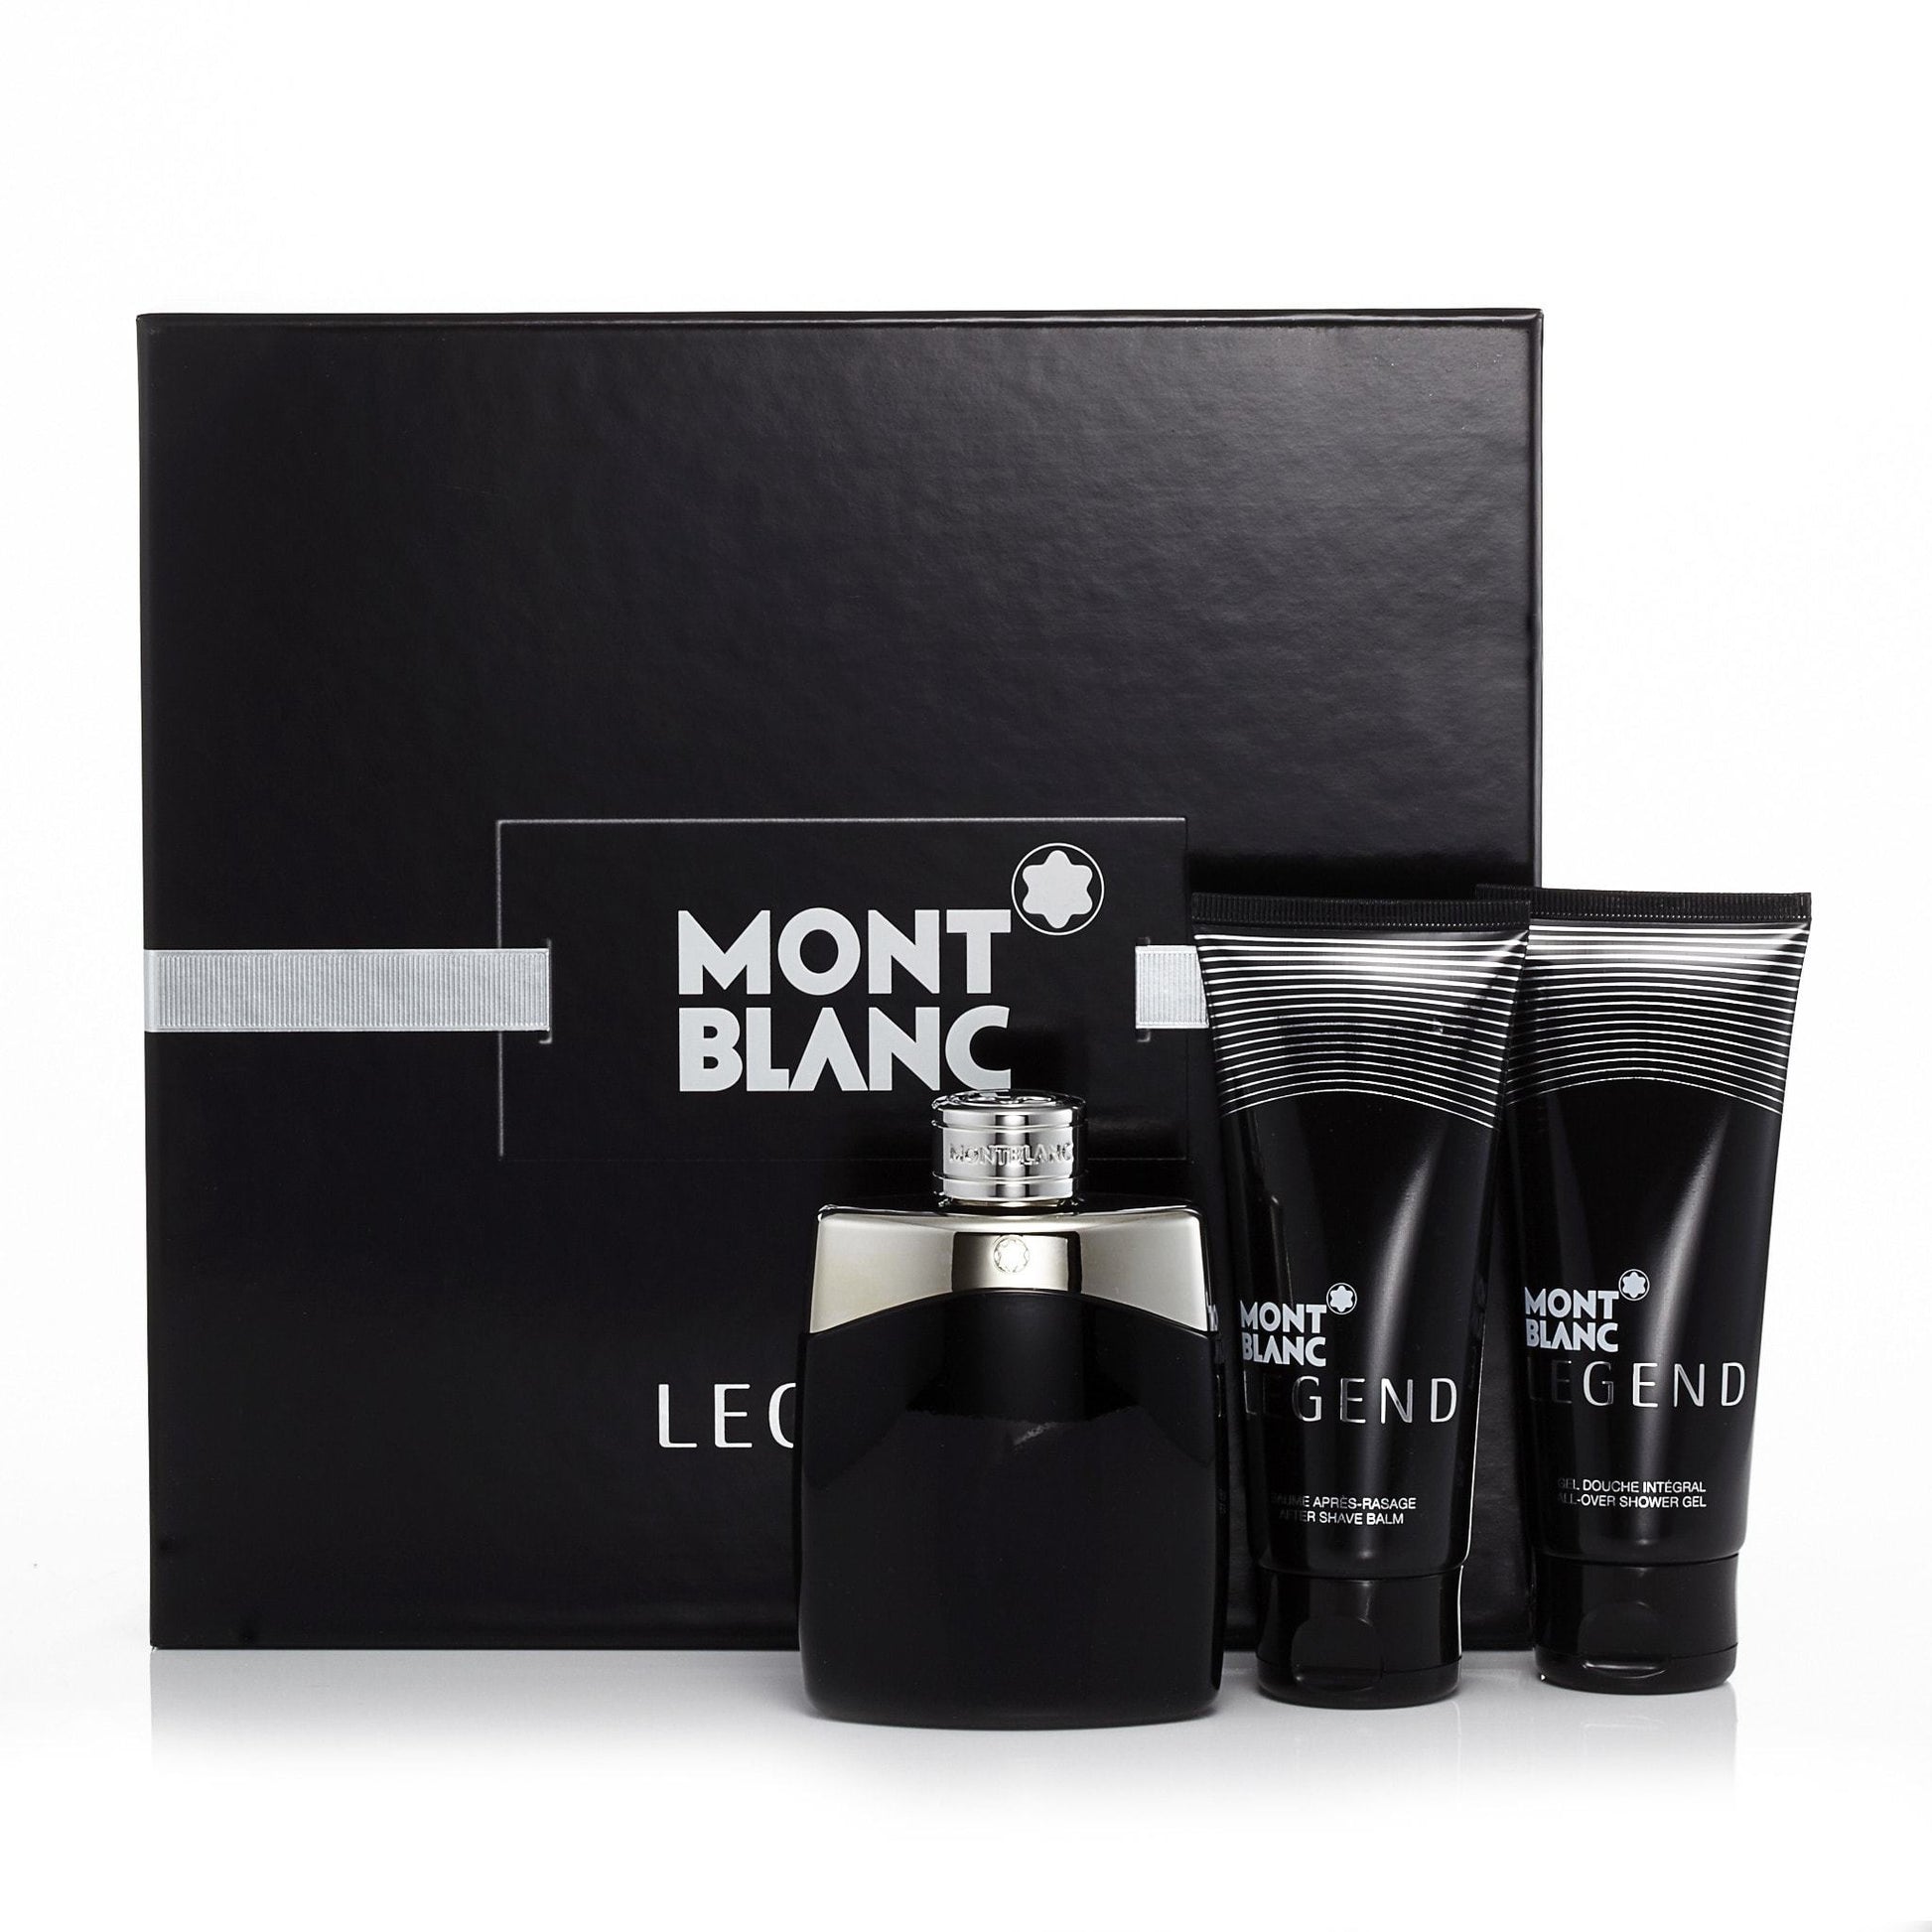 Legend Gift Set Eau de Toilette, After Shave and Shower Gel for Men by Montblanc, Product image 2